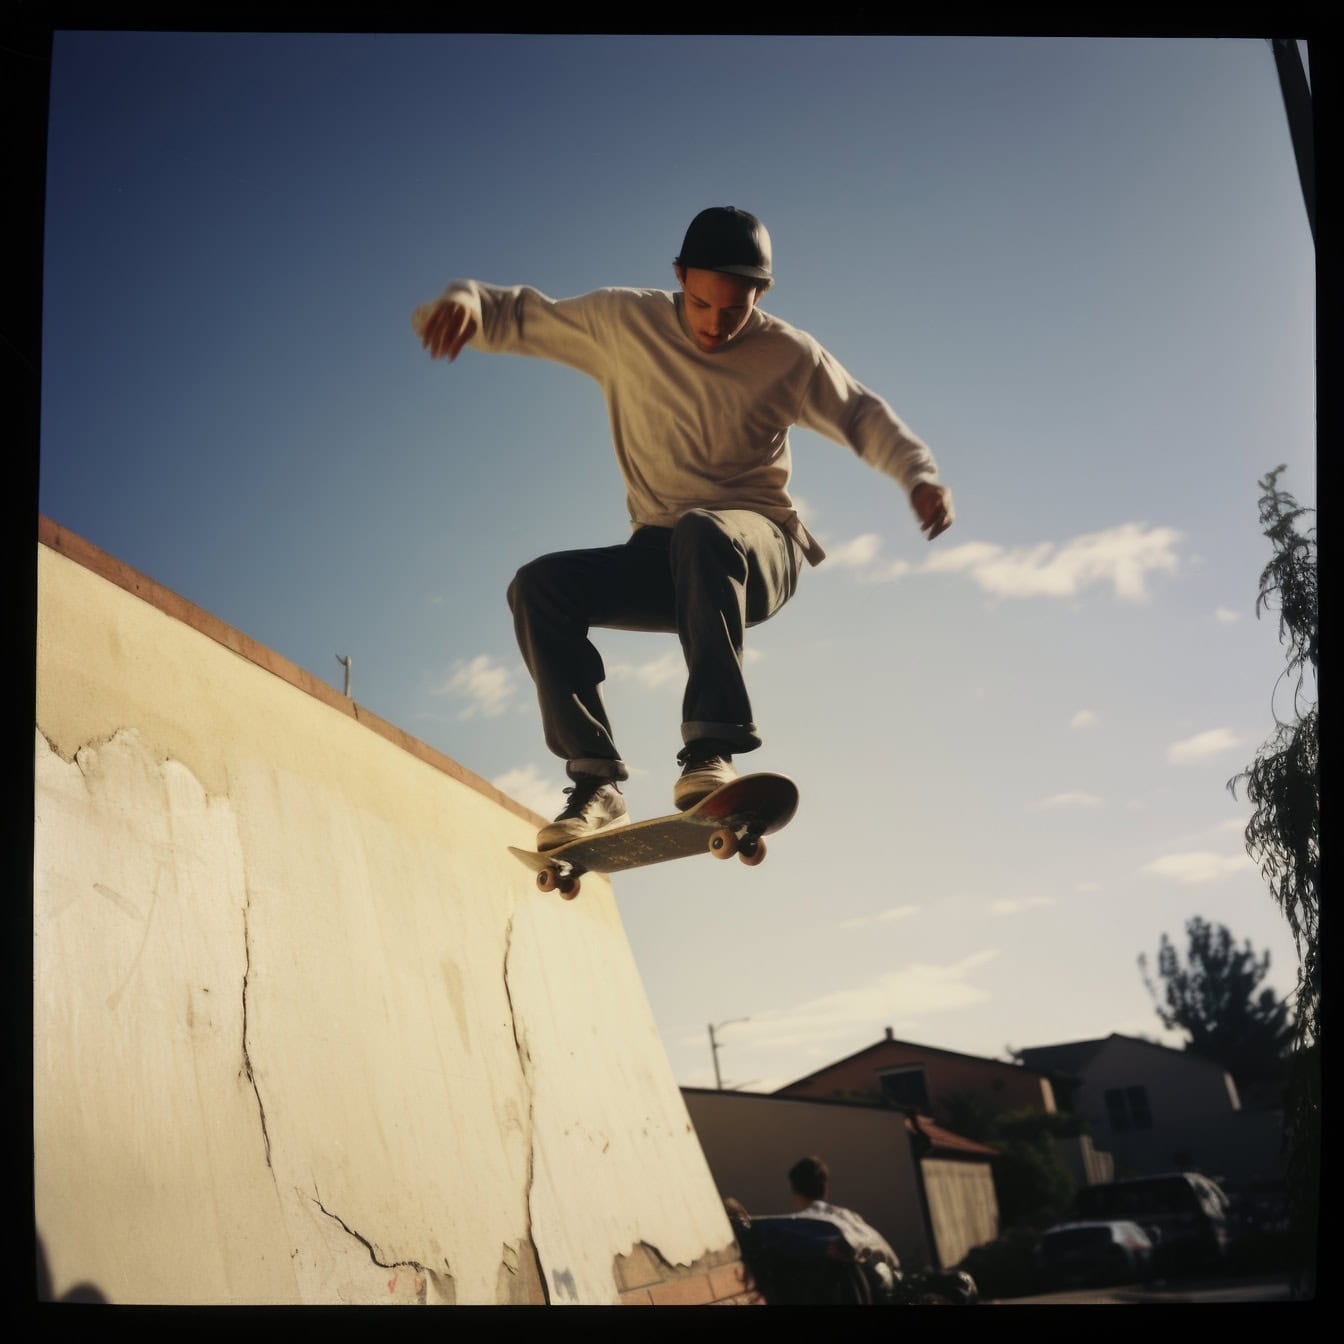 Foto polaroid lama seorang pemuda melompat dari tanjakan di atas skateboard seperti stuntman